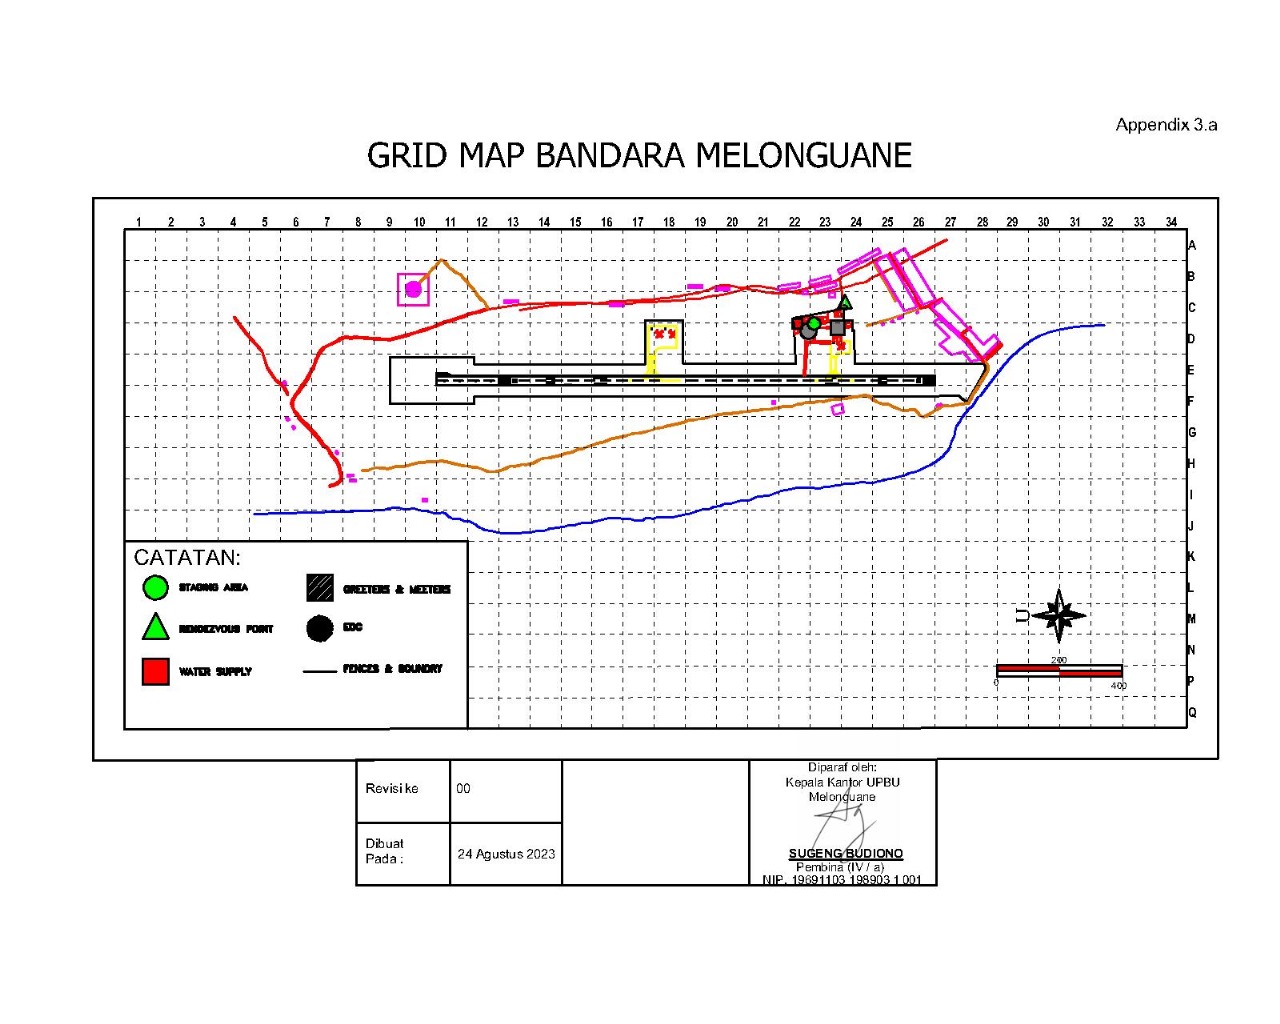 Gambar Peta Bandara Grid Map Bandara Melonguane